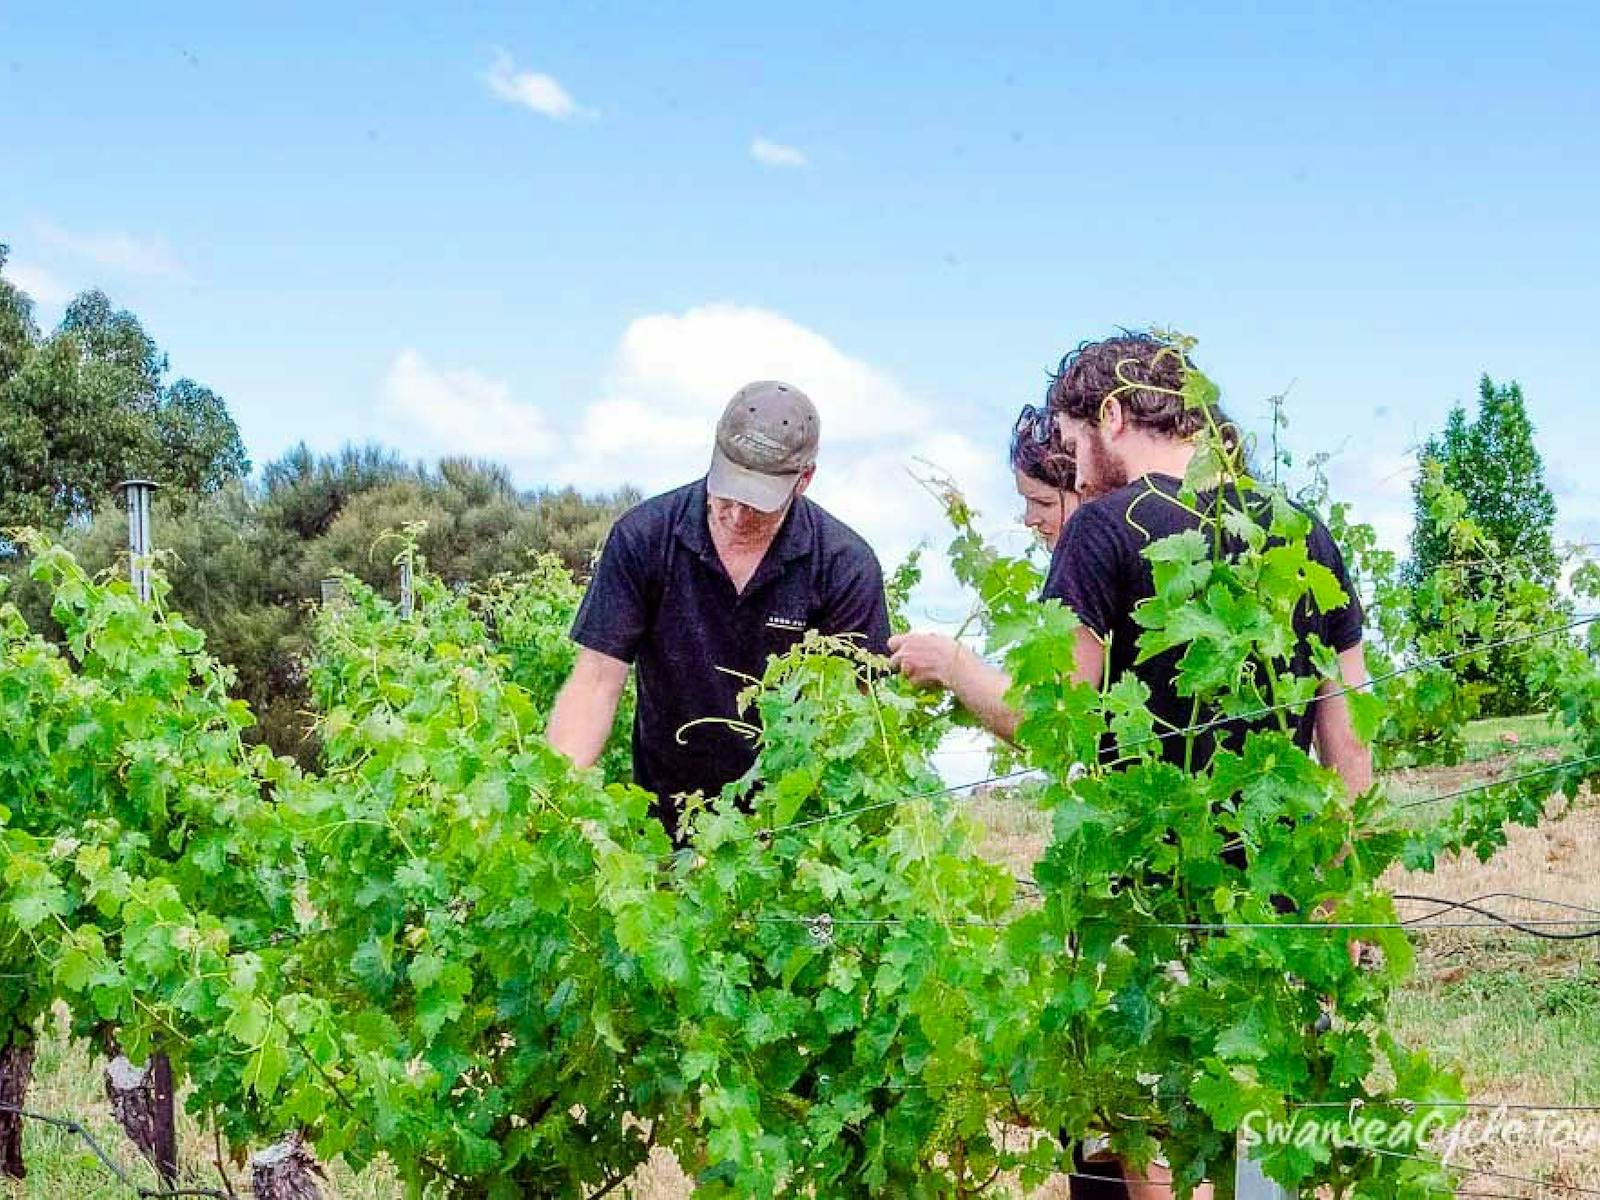 Inspecting the vineyard